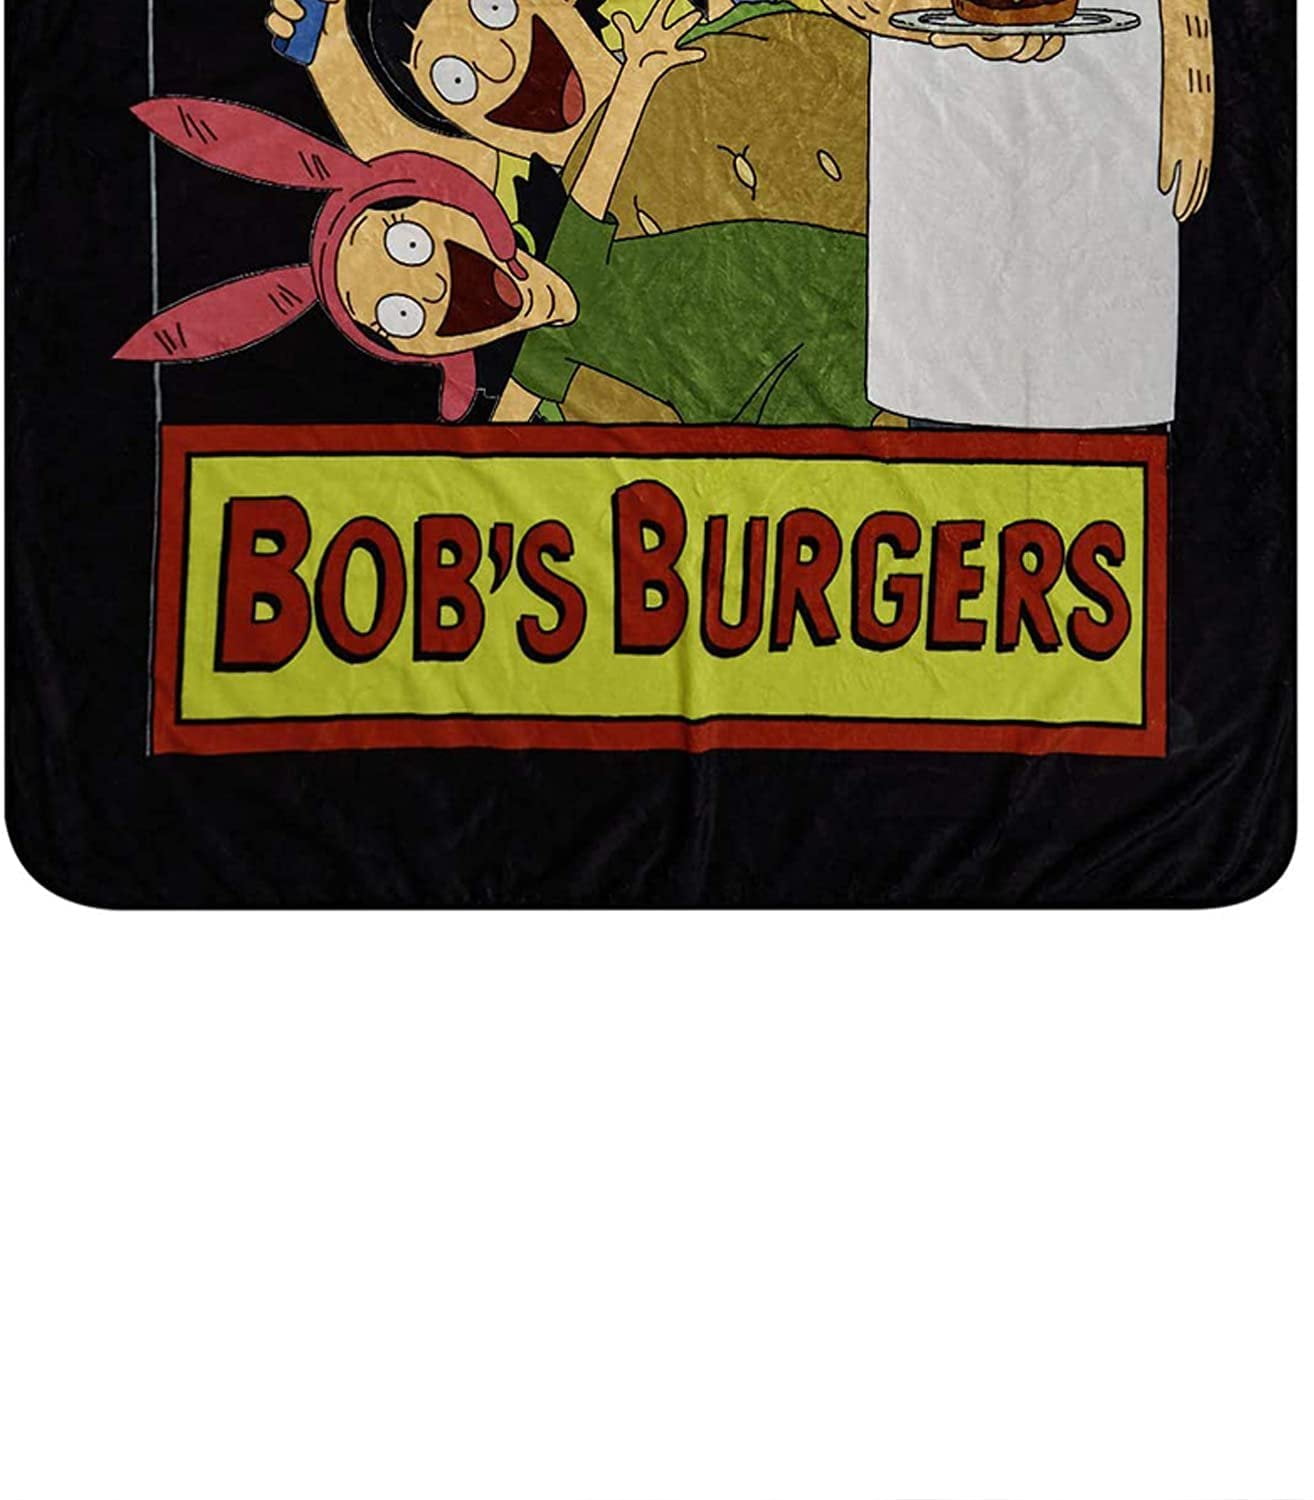  Bob's Burgers Fleece Throw Blanket - Bob, Tina & Louise Belcher  Throw Blanket(Group Panel) : Home & Kitchen